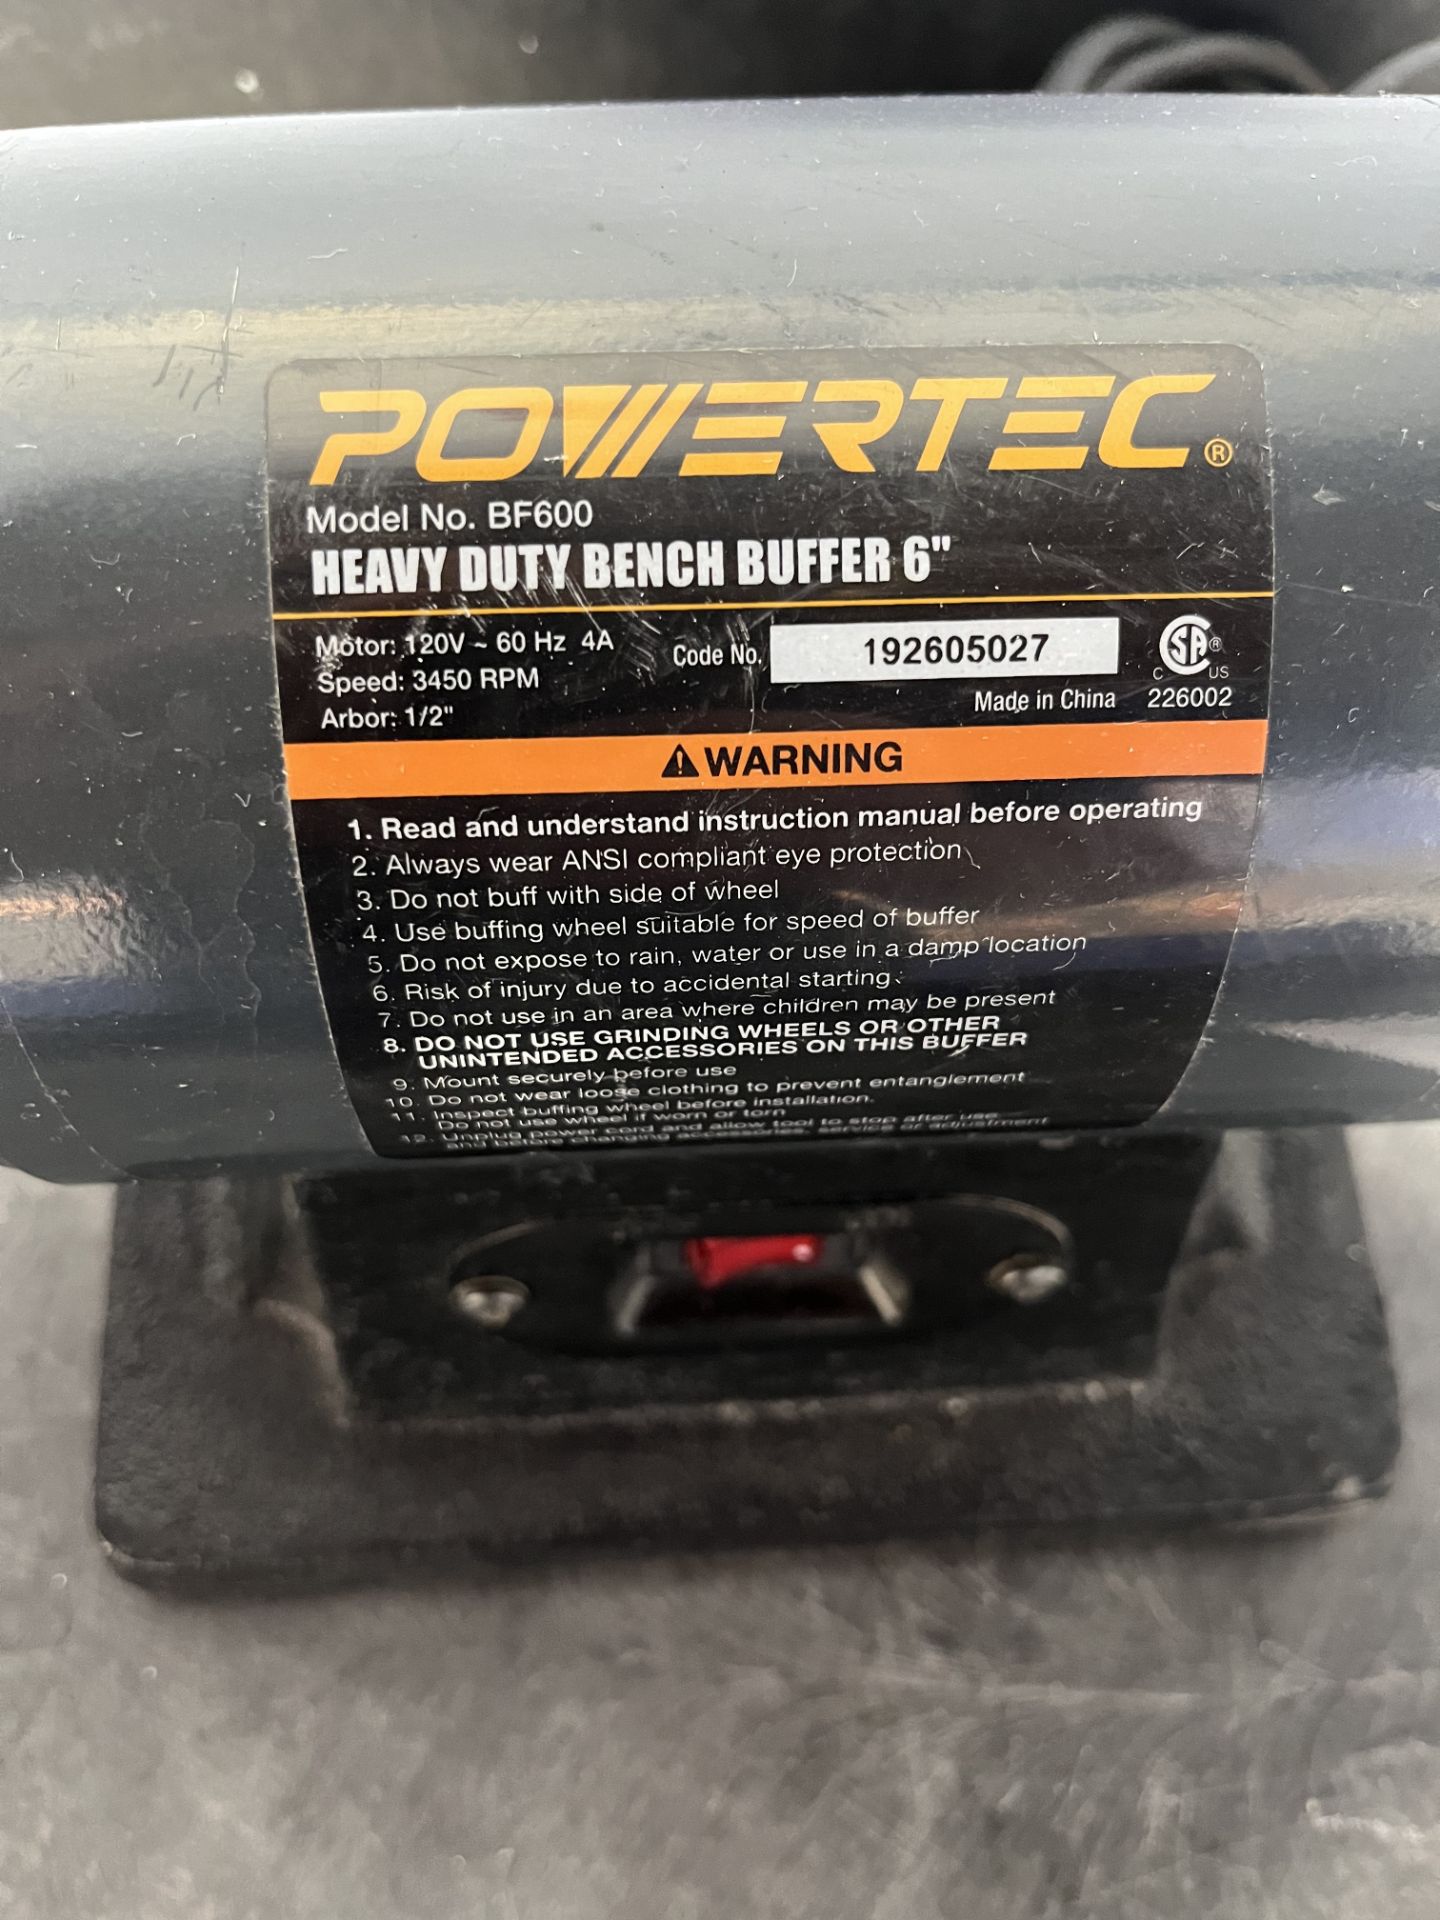 PowerTec BF600, Bench buffer 6", per customer good condition - Image 2 of 3